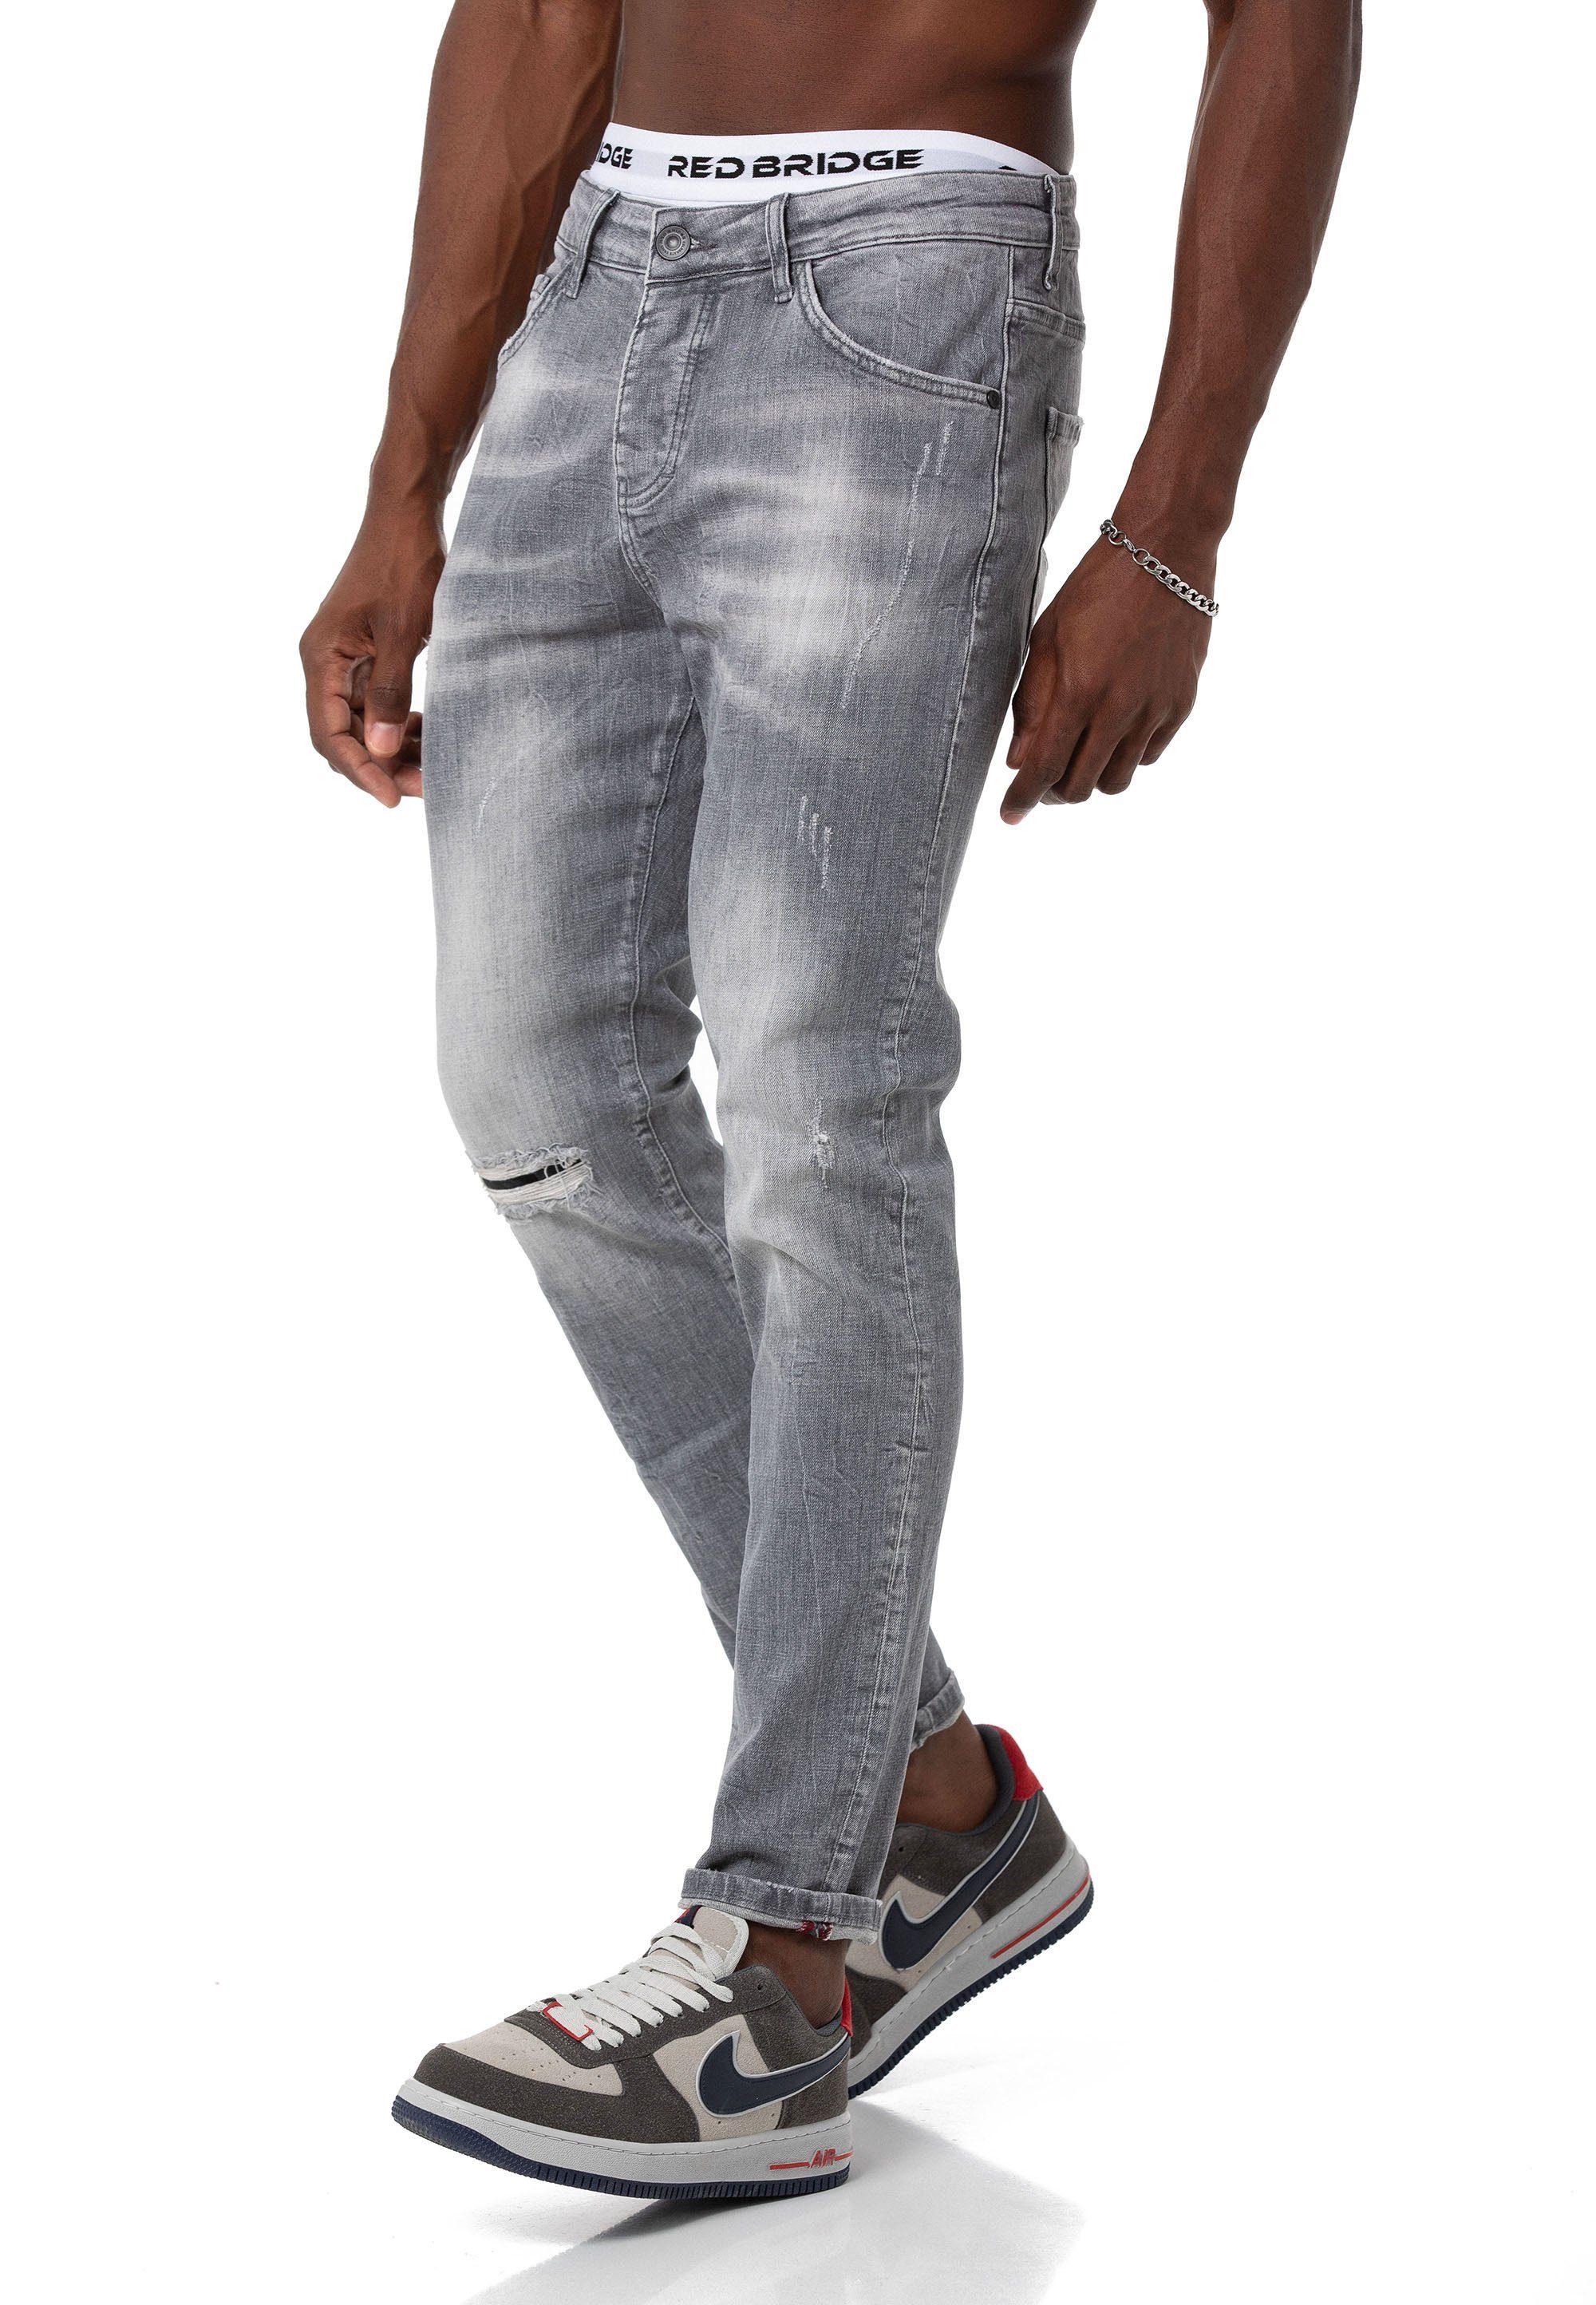 Slim-fit-Jeans RedBridge Grau Distressed-Look Pants Hose Denim Straight Leg